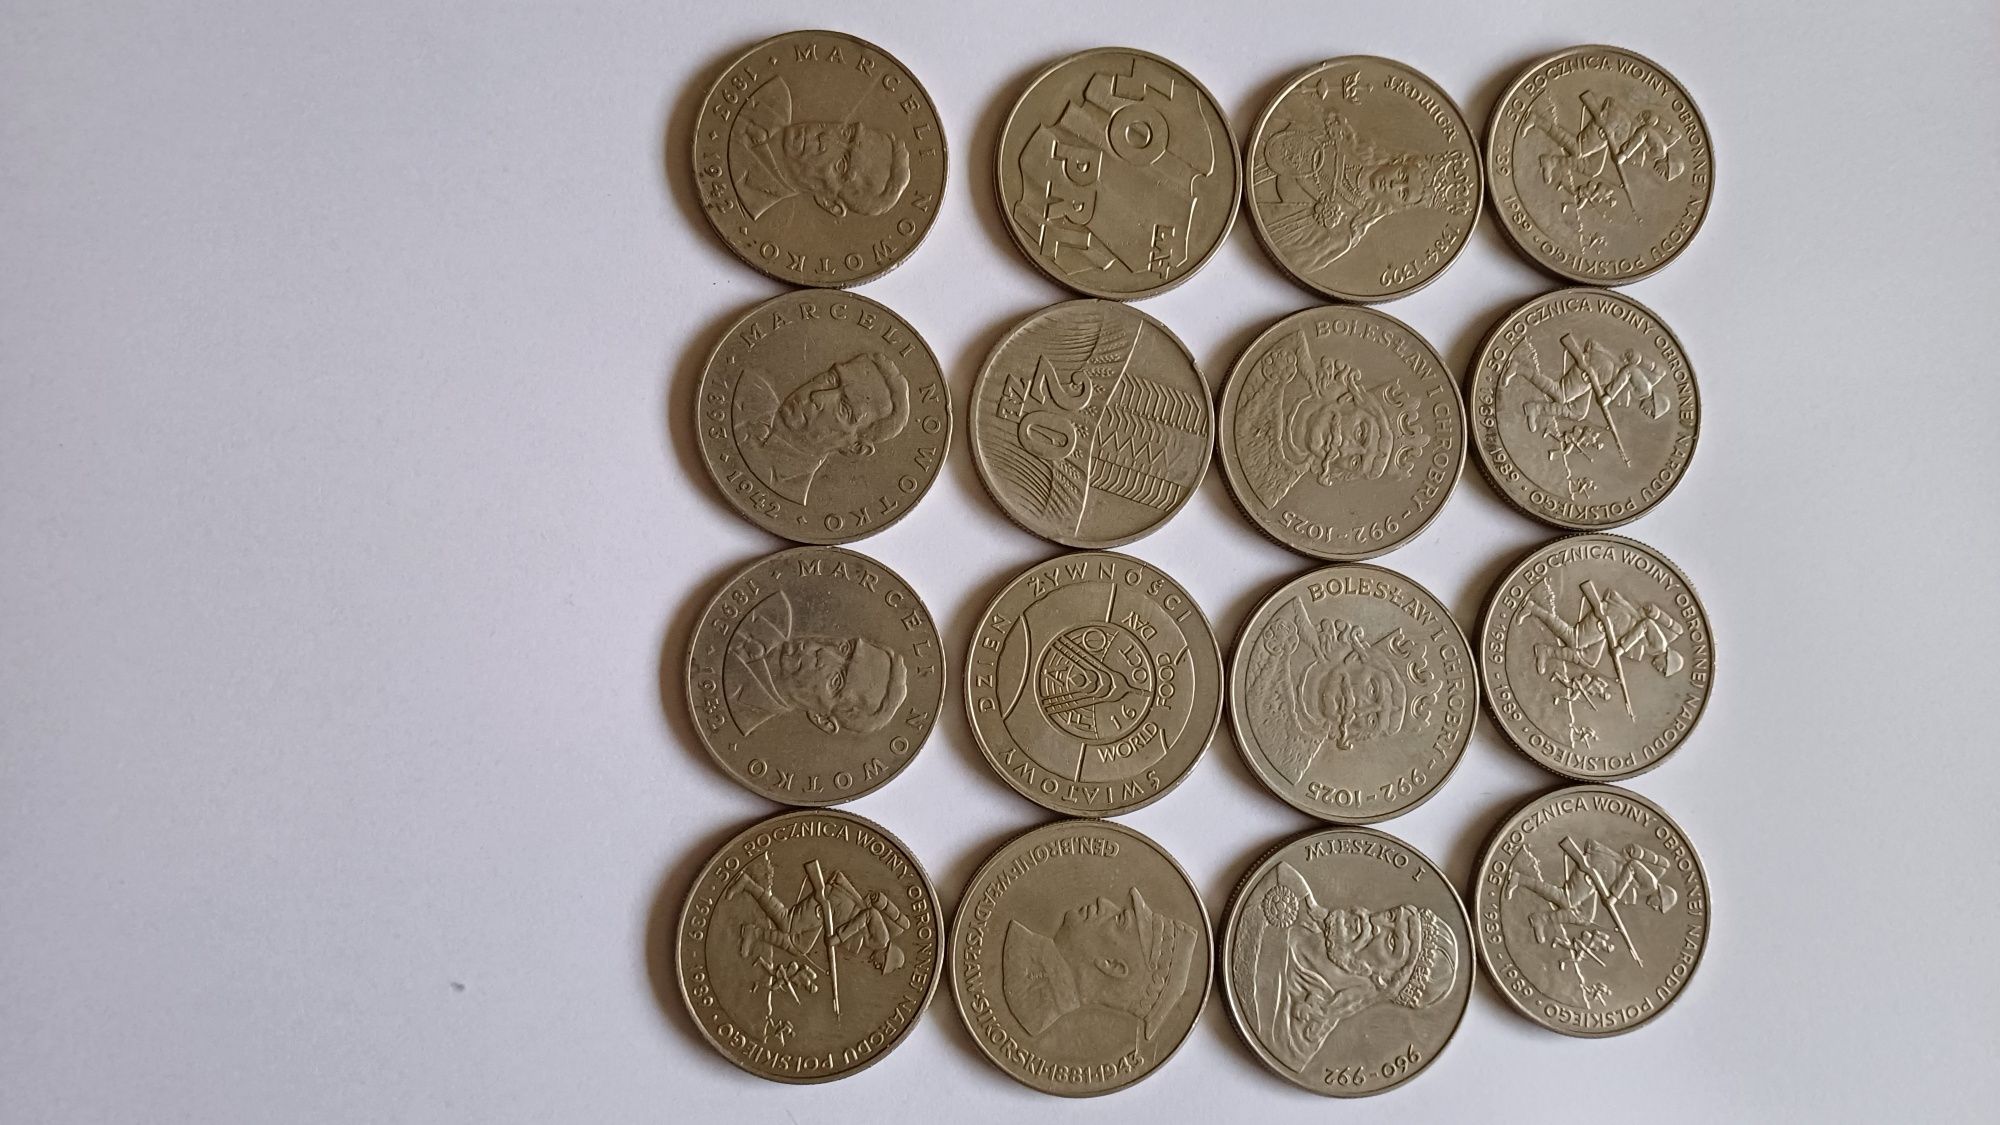 Stare monety z lat 80